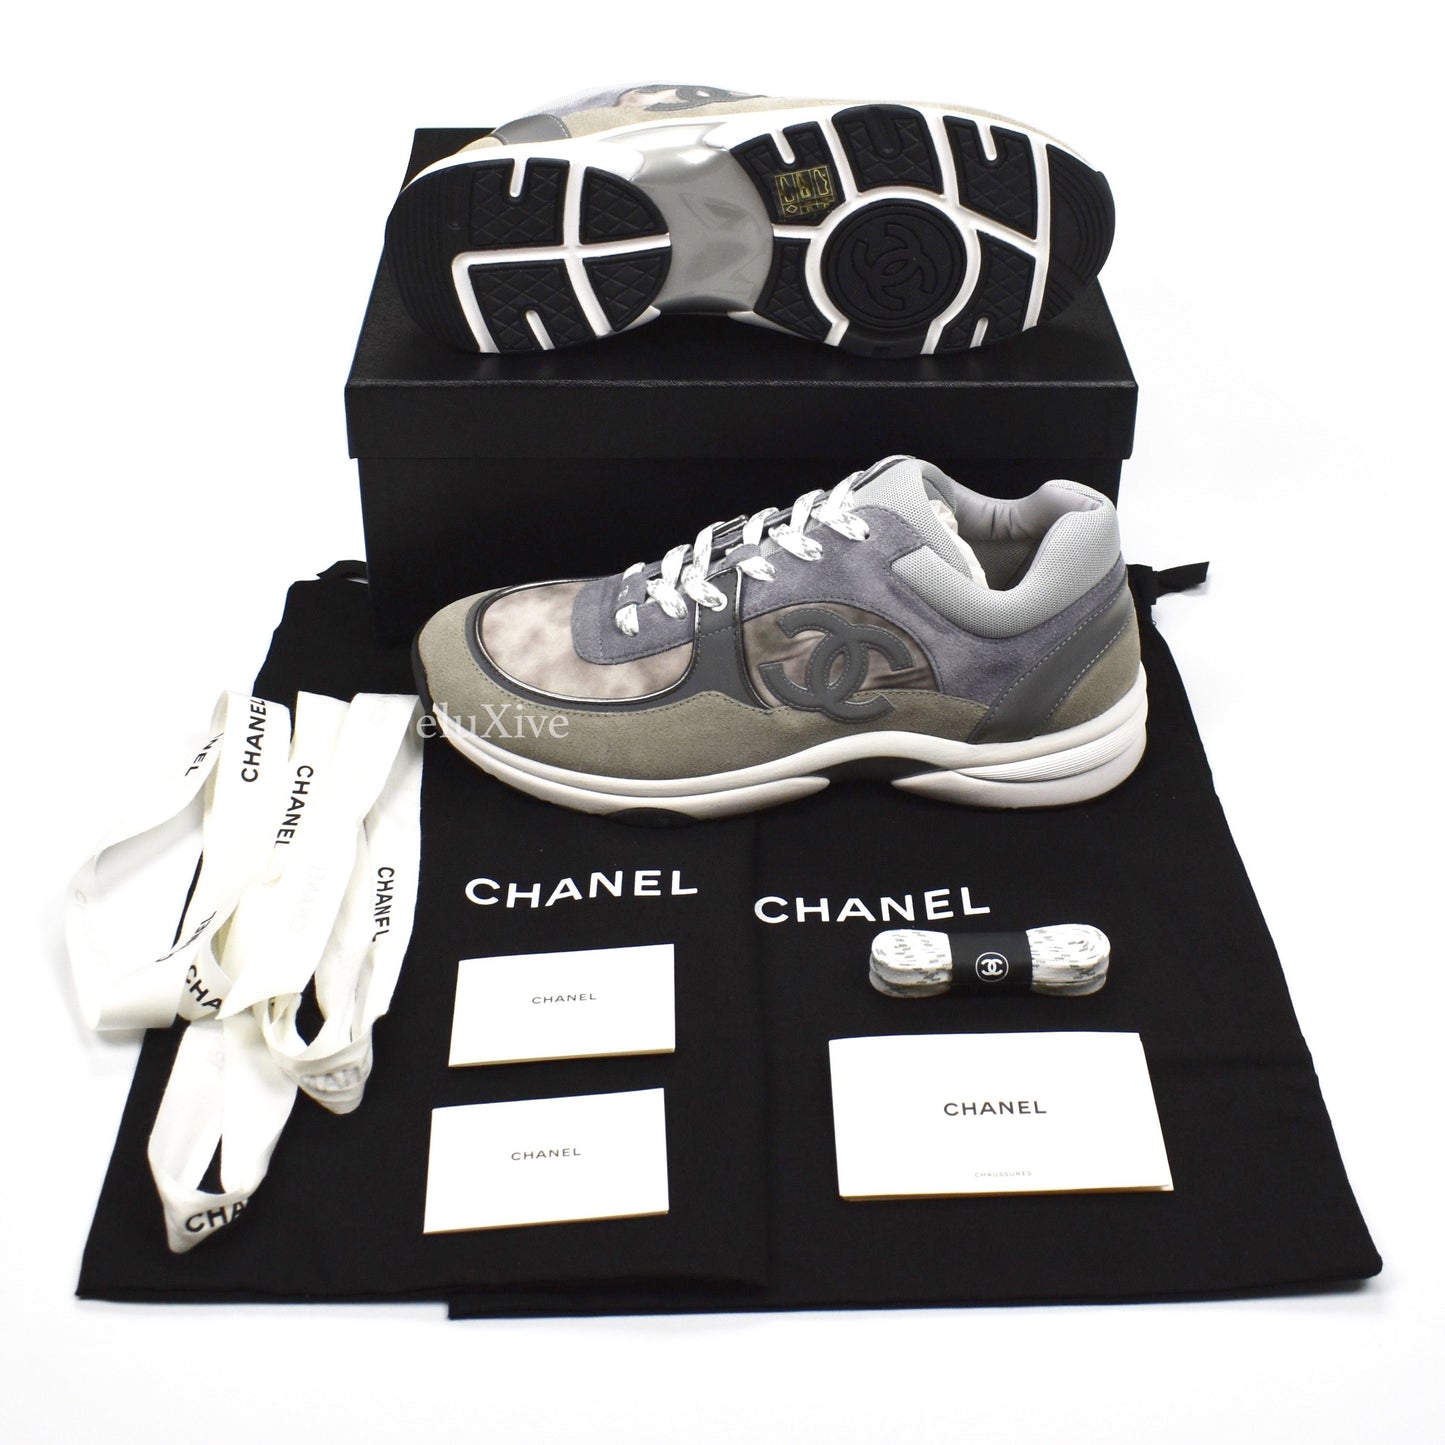 Chanel - Classic Monogram Logo Trainer (Gray)